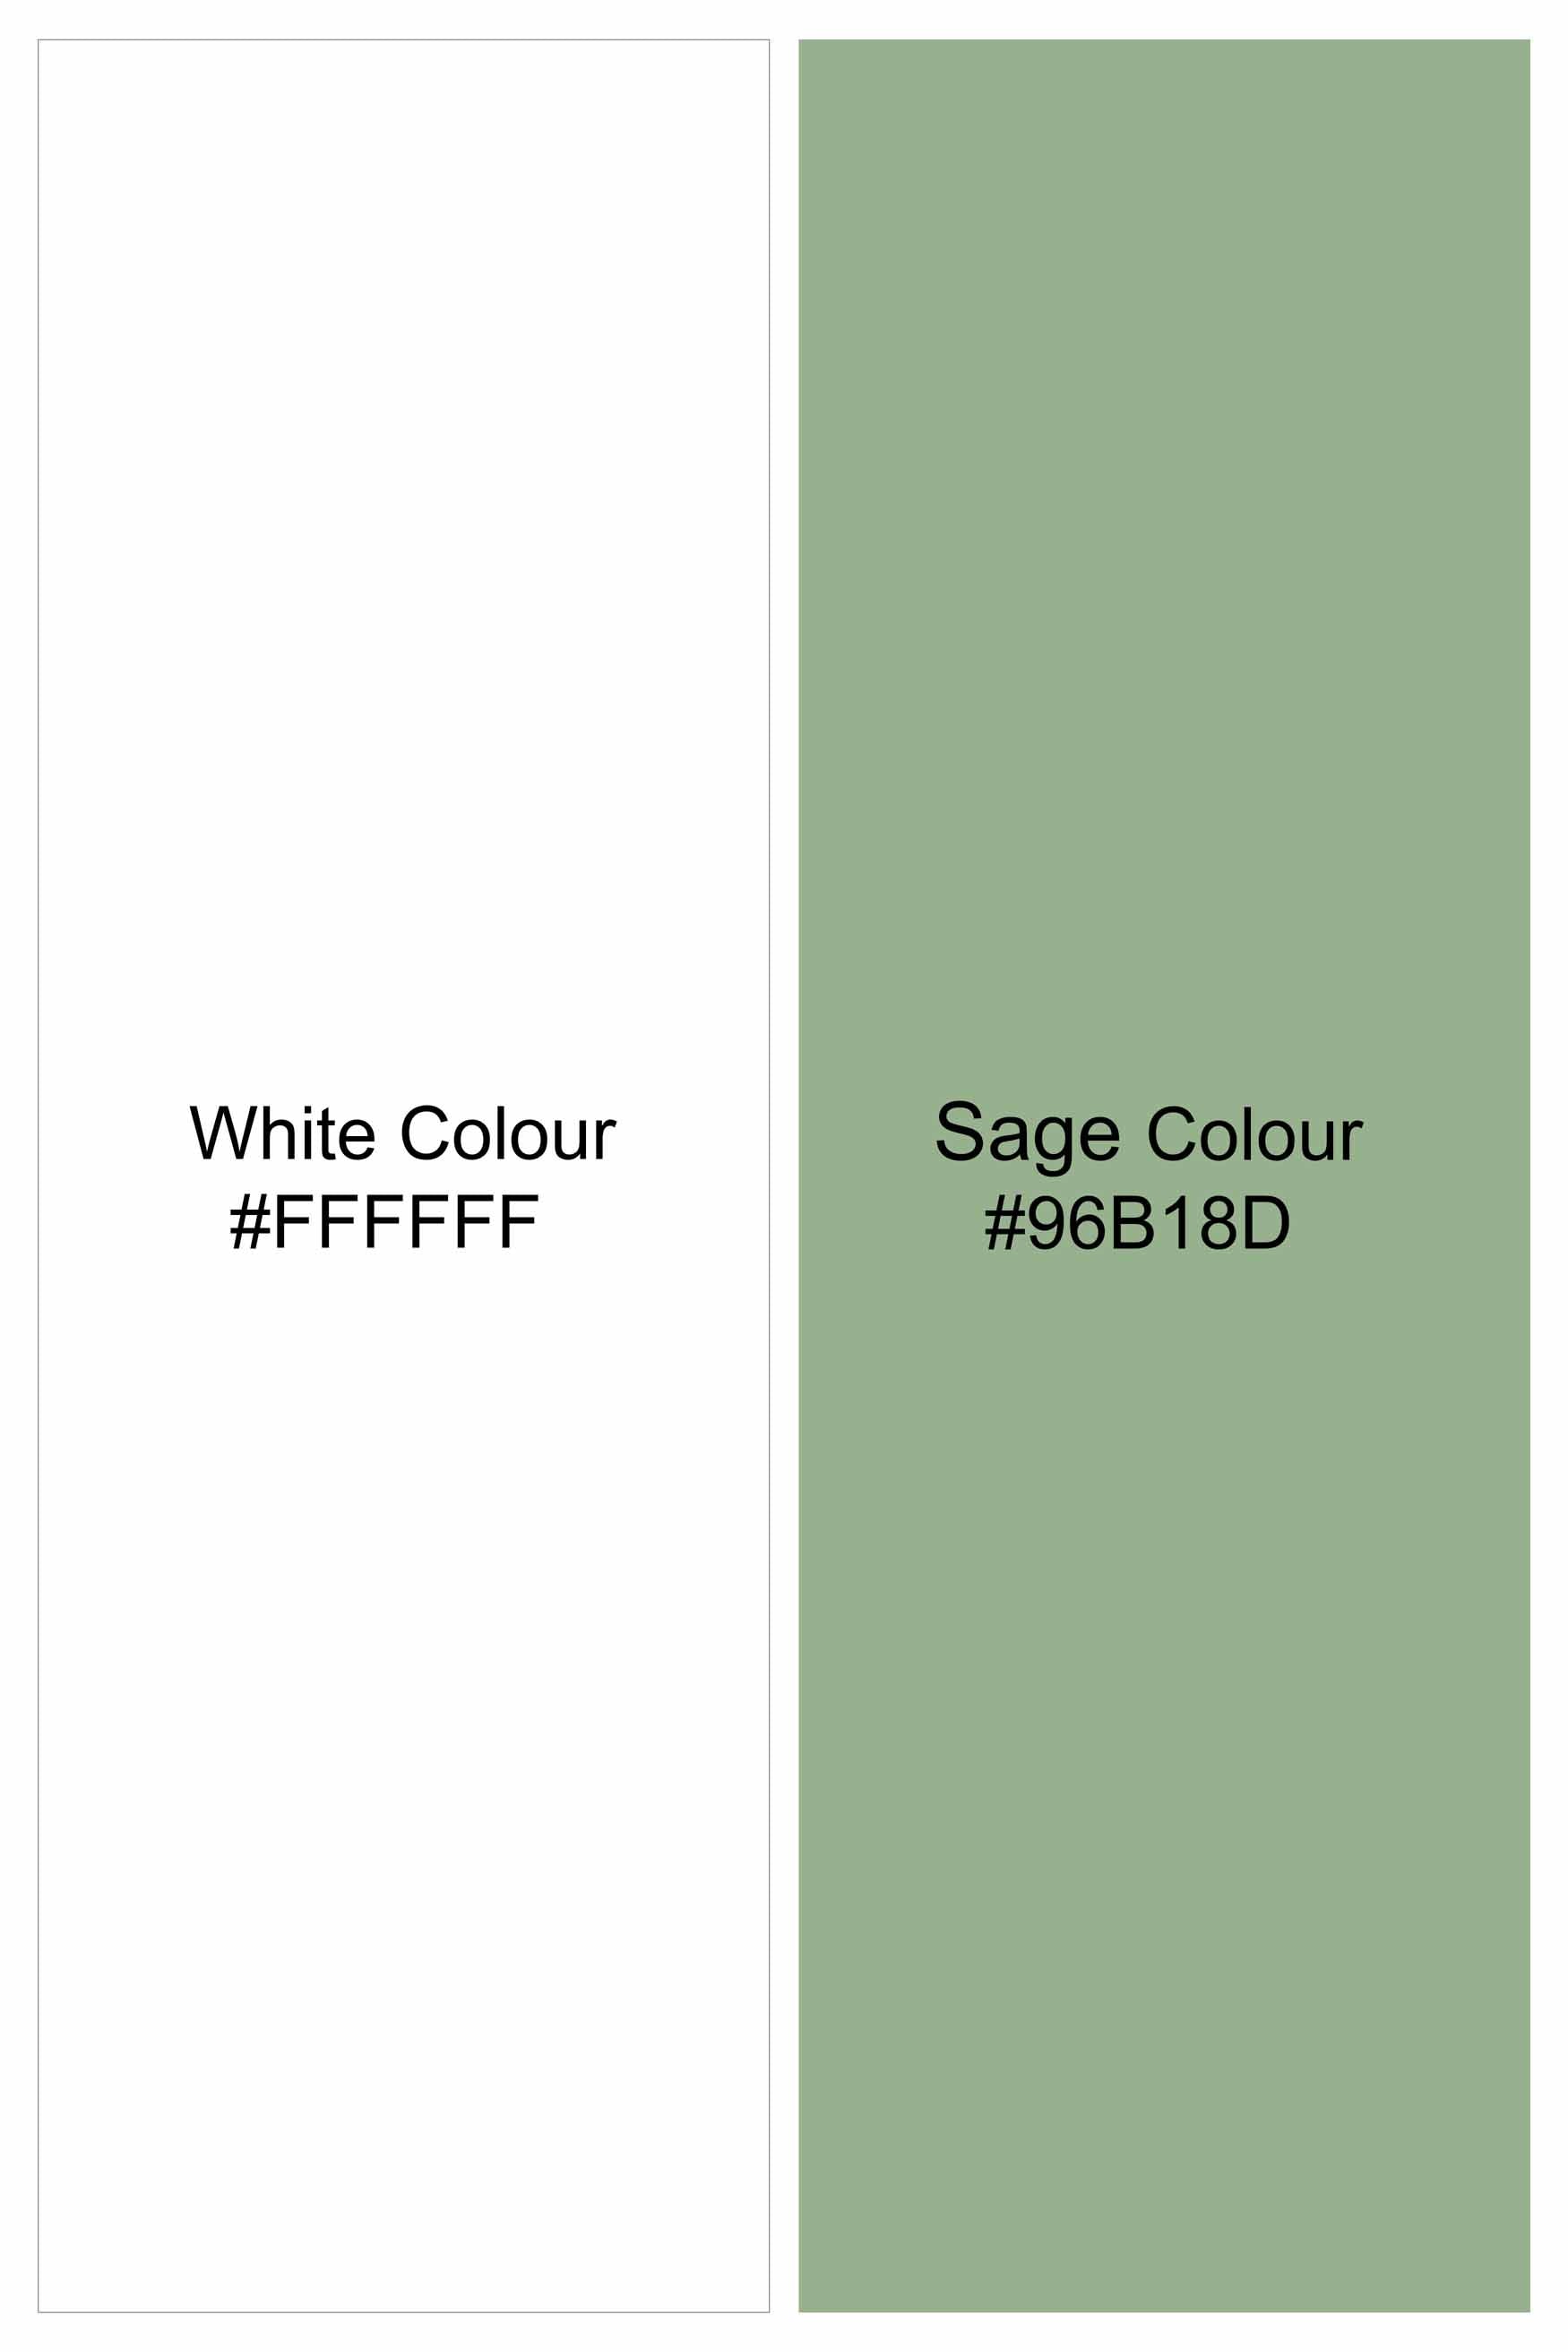 Bright White and Sage Green Paisley Printed Premium Tencel Shirt